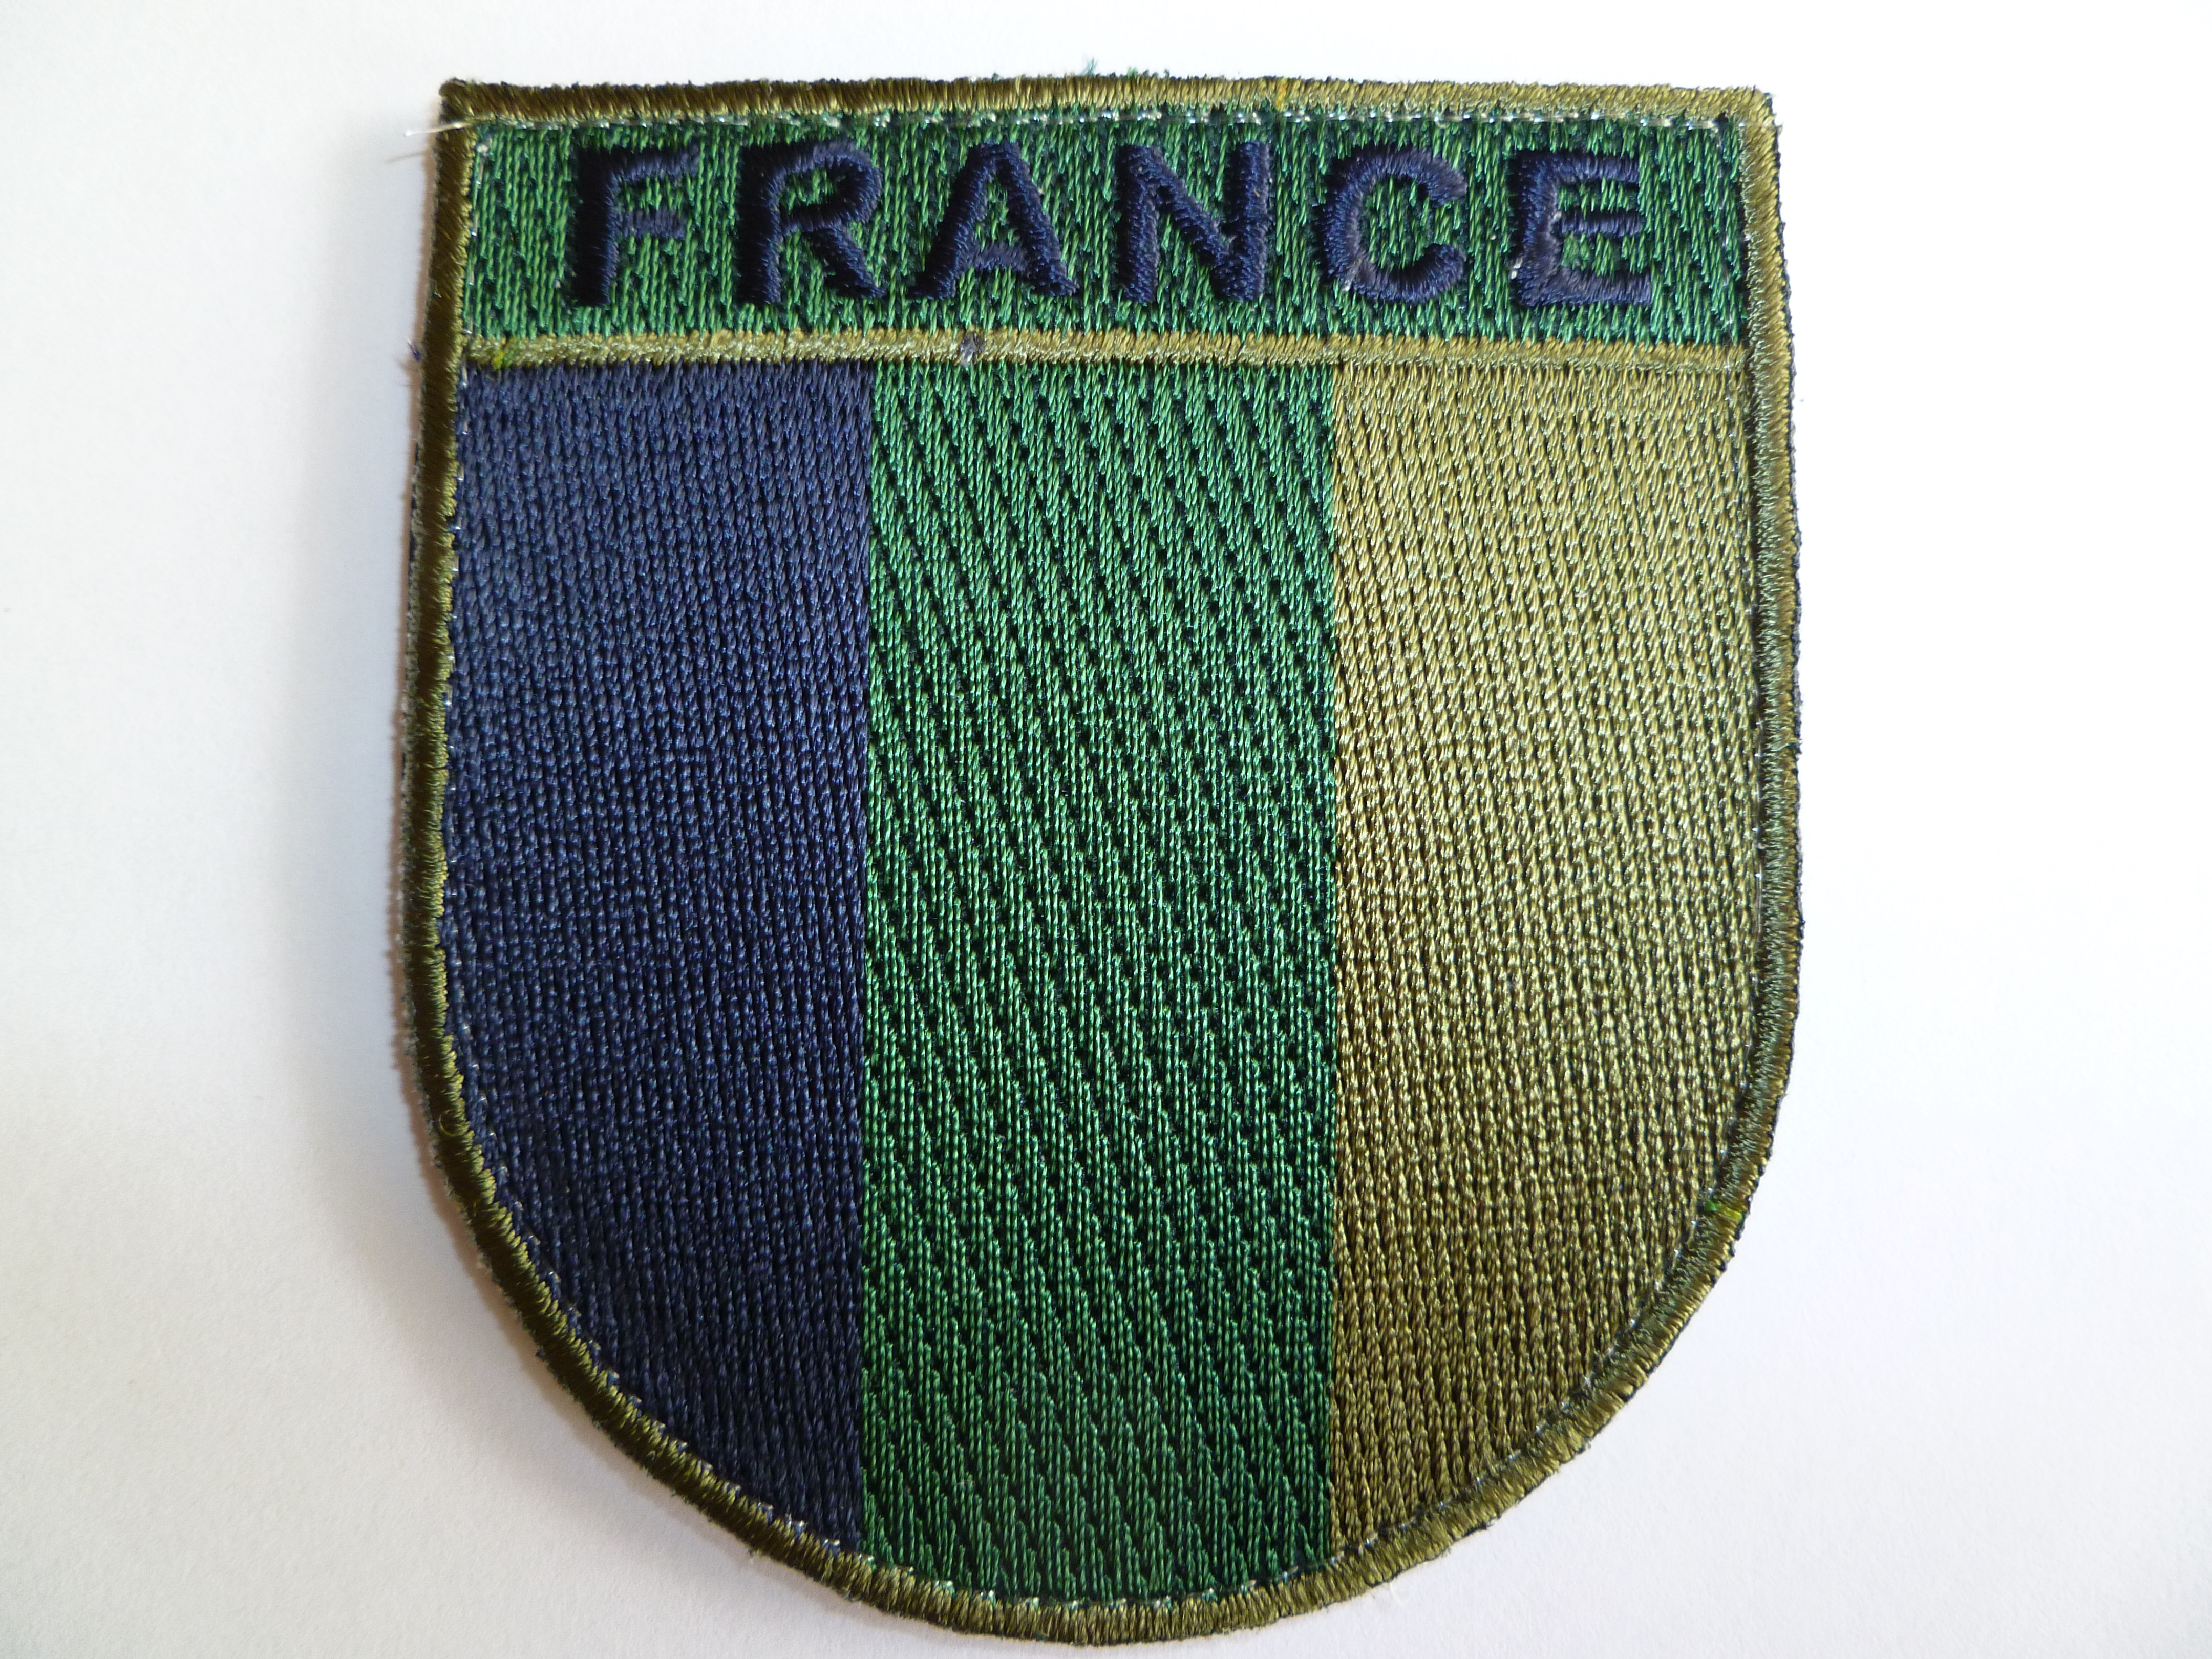 Ecusson France (bord vert)